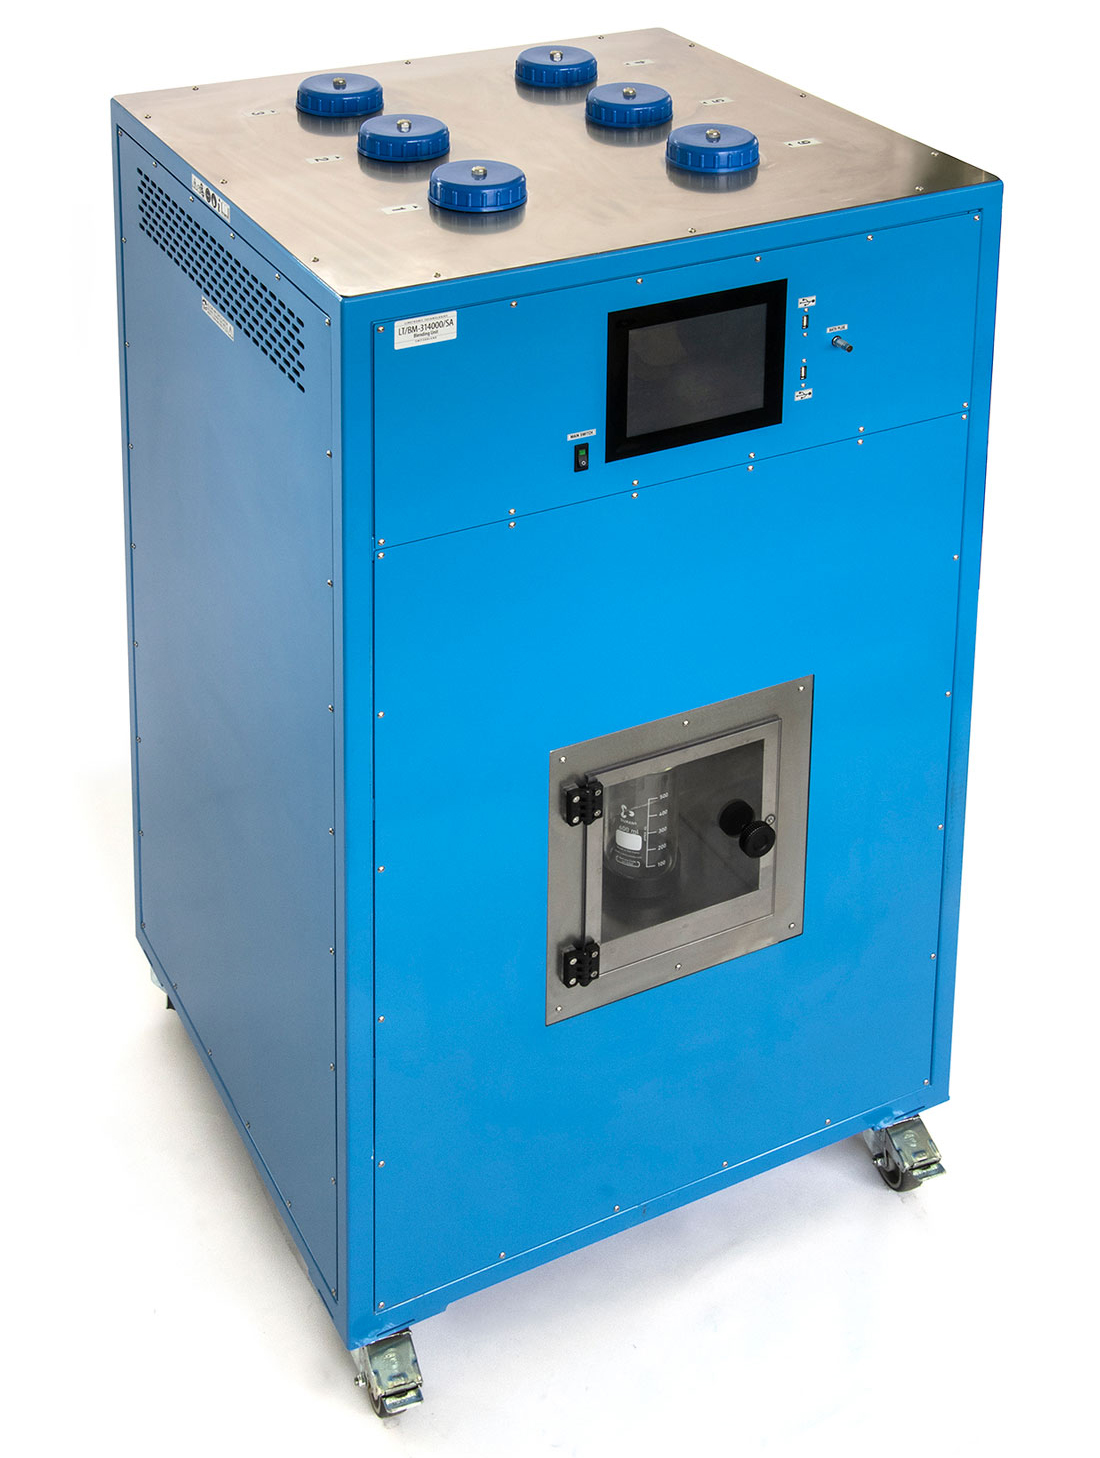 OilLab 900: Automatic Refrigerated Distillation